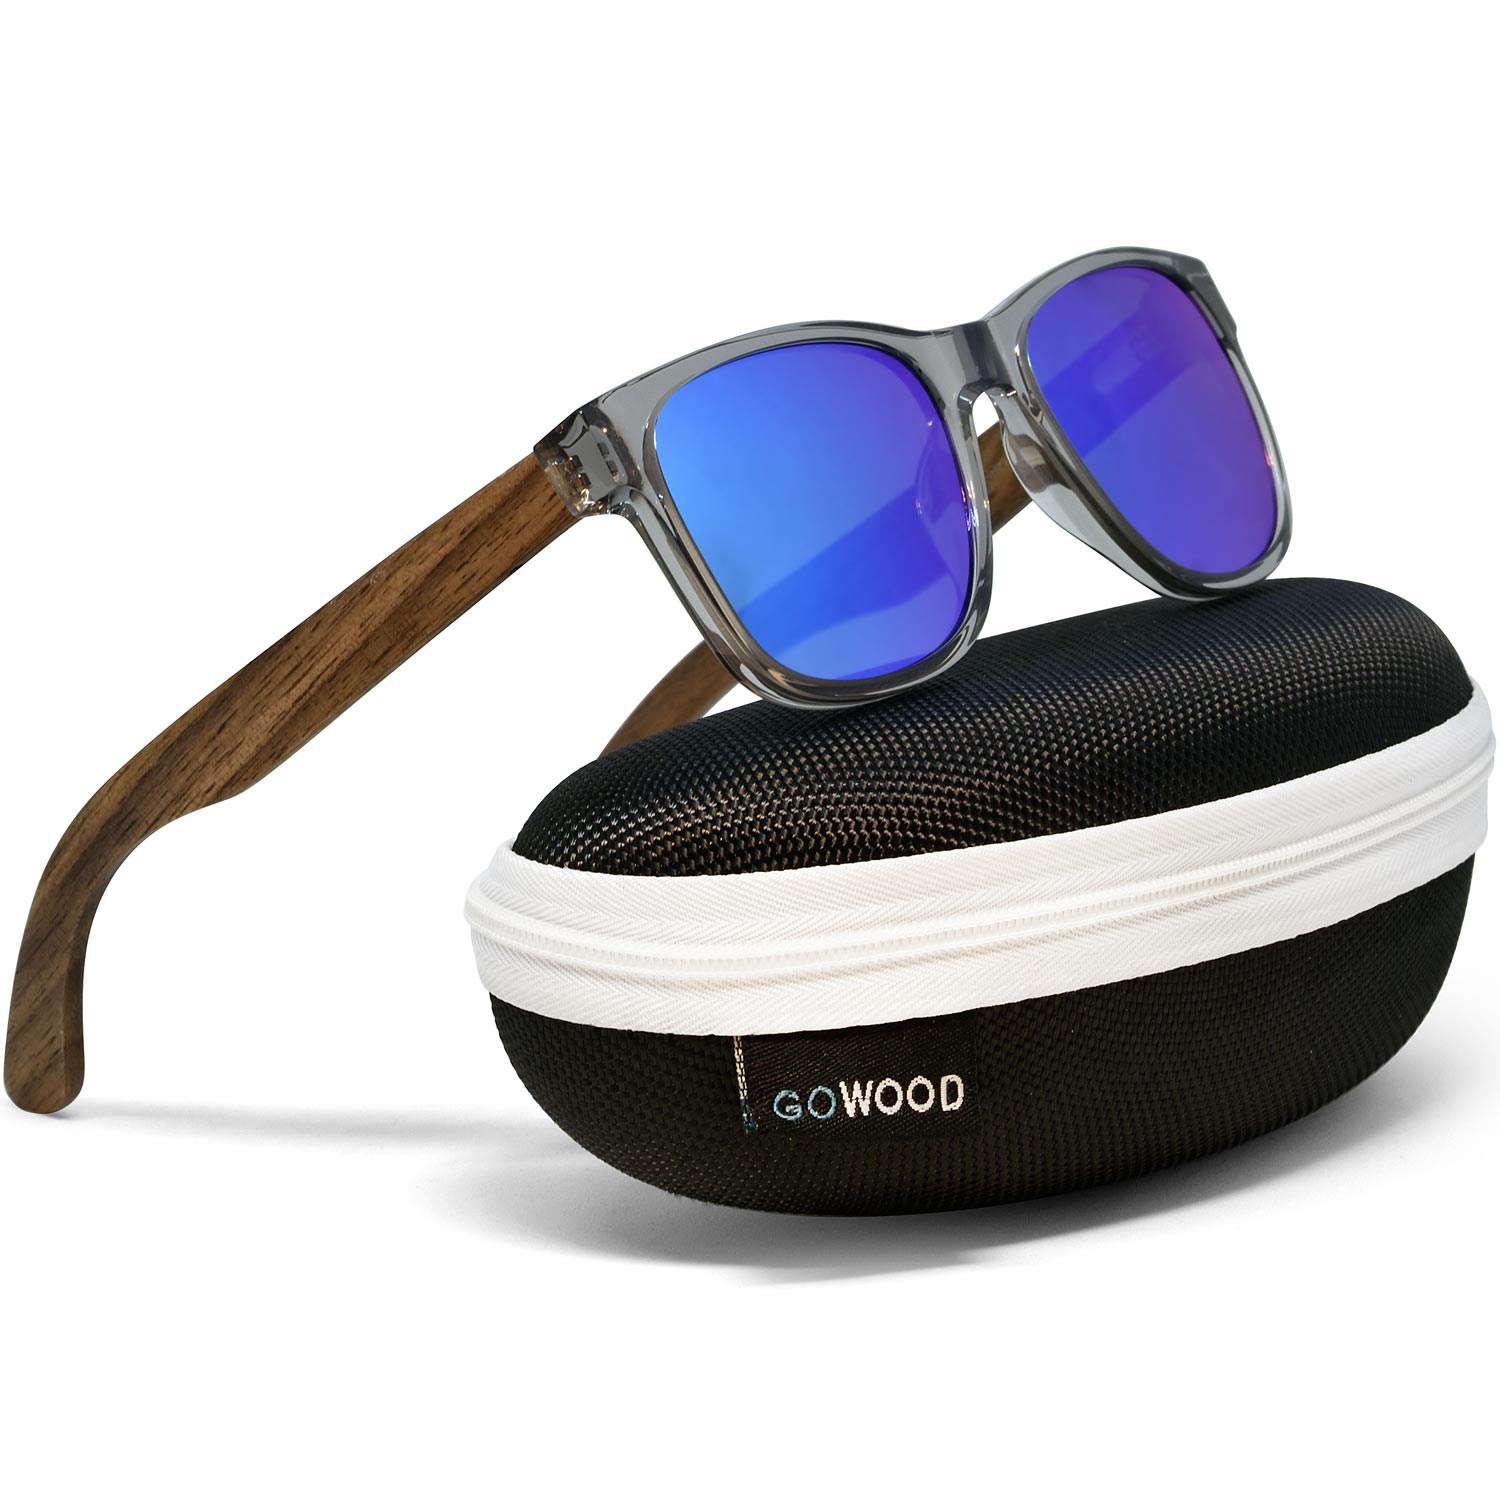 Walnut wood sunglasses classic style transparent frame with blue lenses zipper case